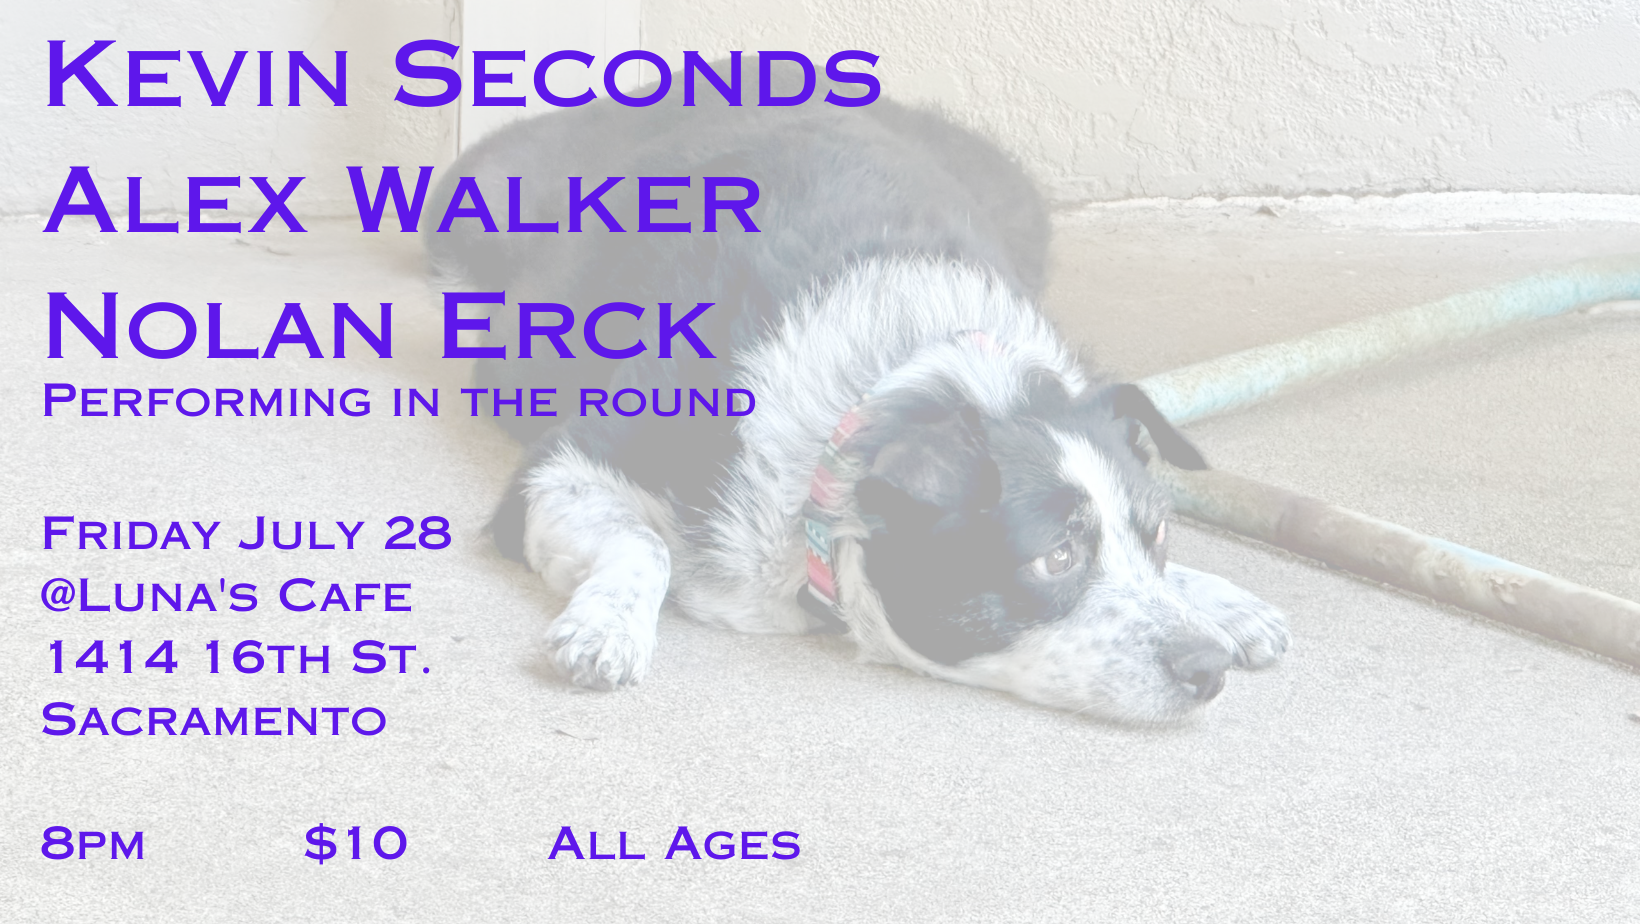 Flyer for Kevin Seconds, Alex Walker, and Nolan Erck at Luna's on Friday July 28.